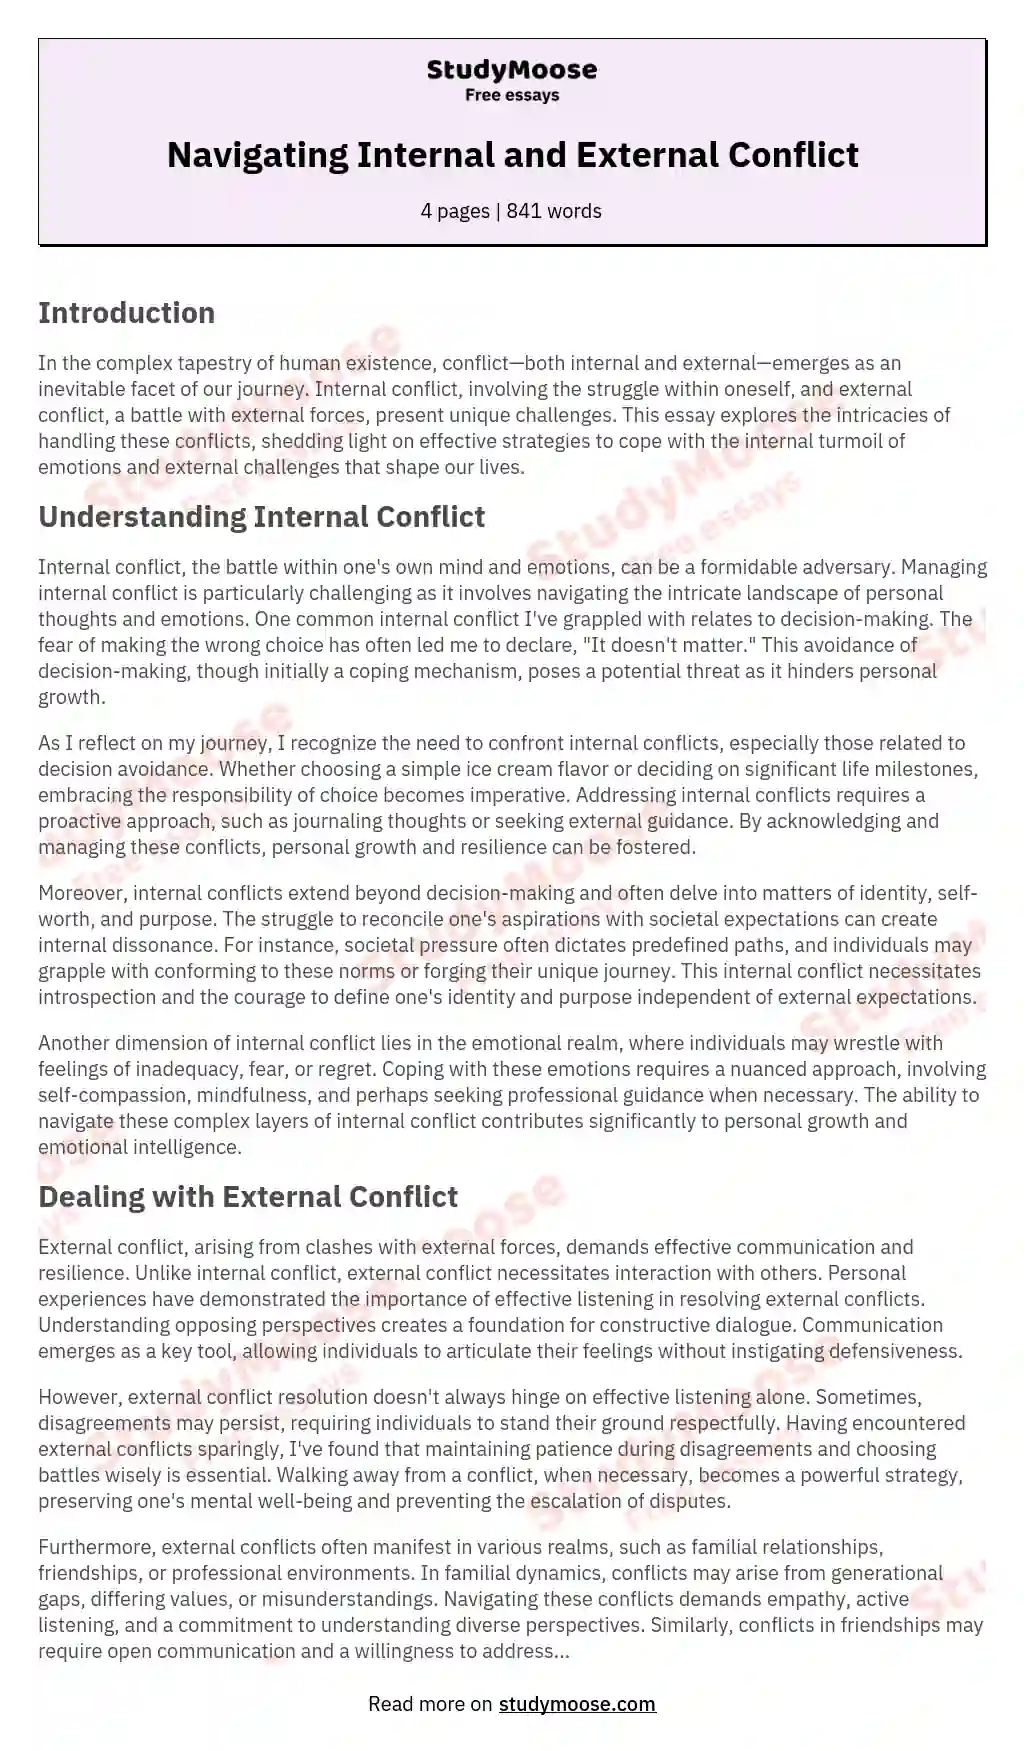 Navigating Internal and External Conflict essay